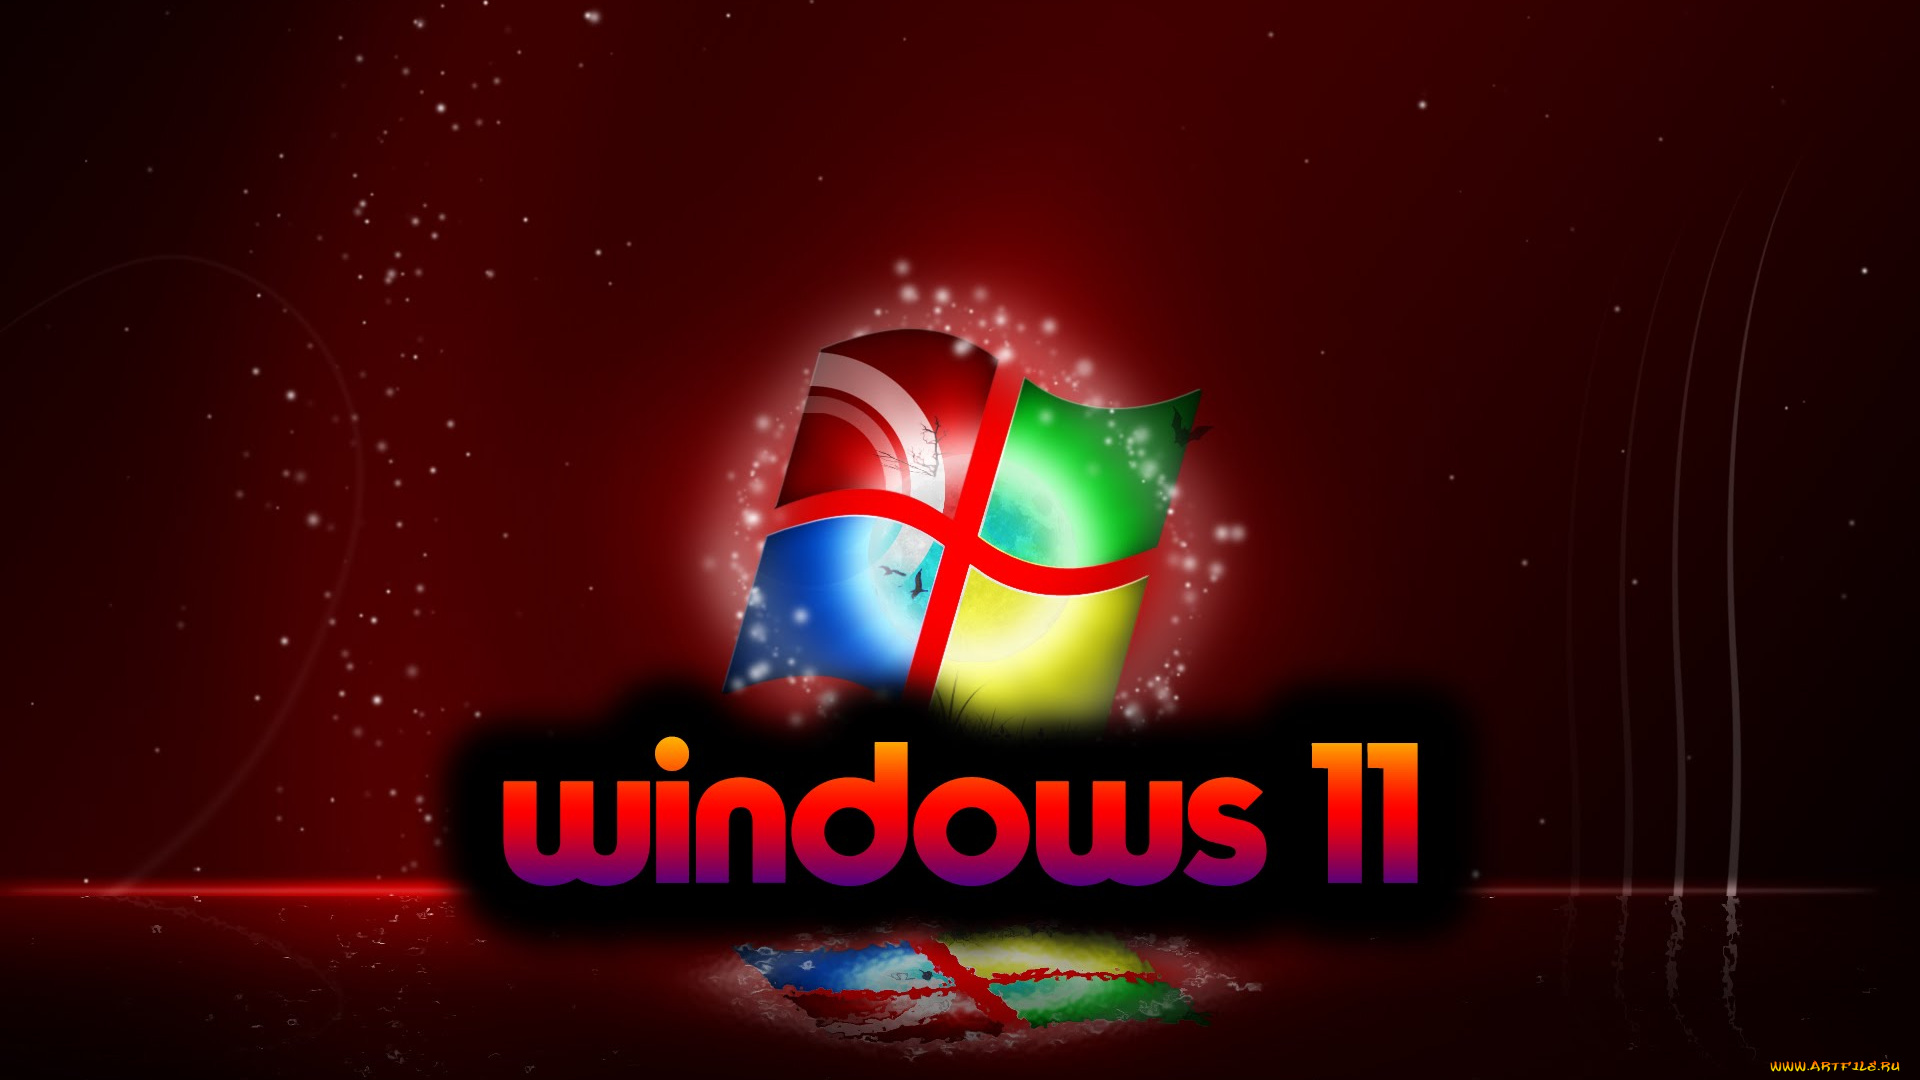 launching date of windows 11